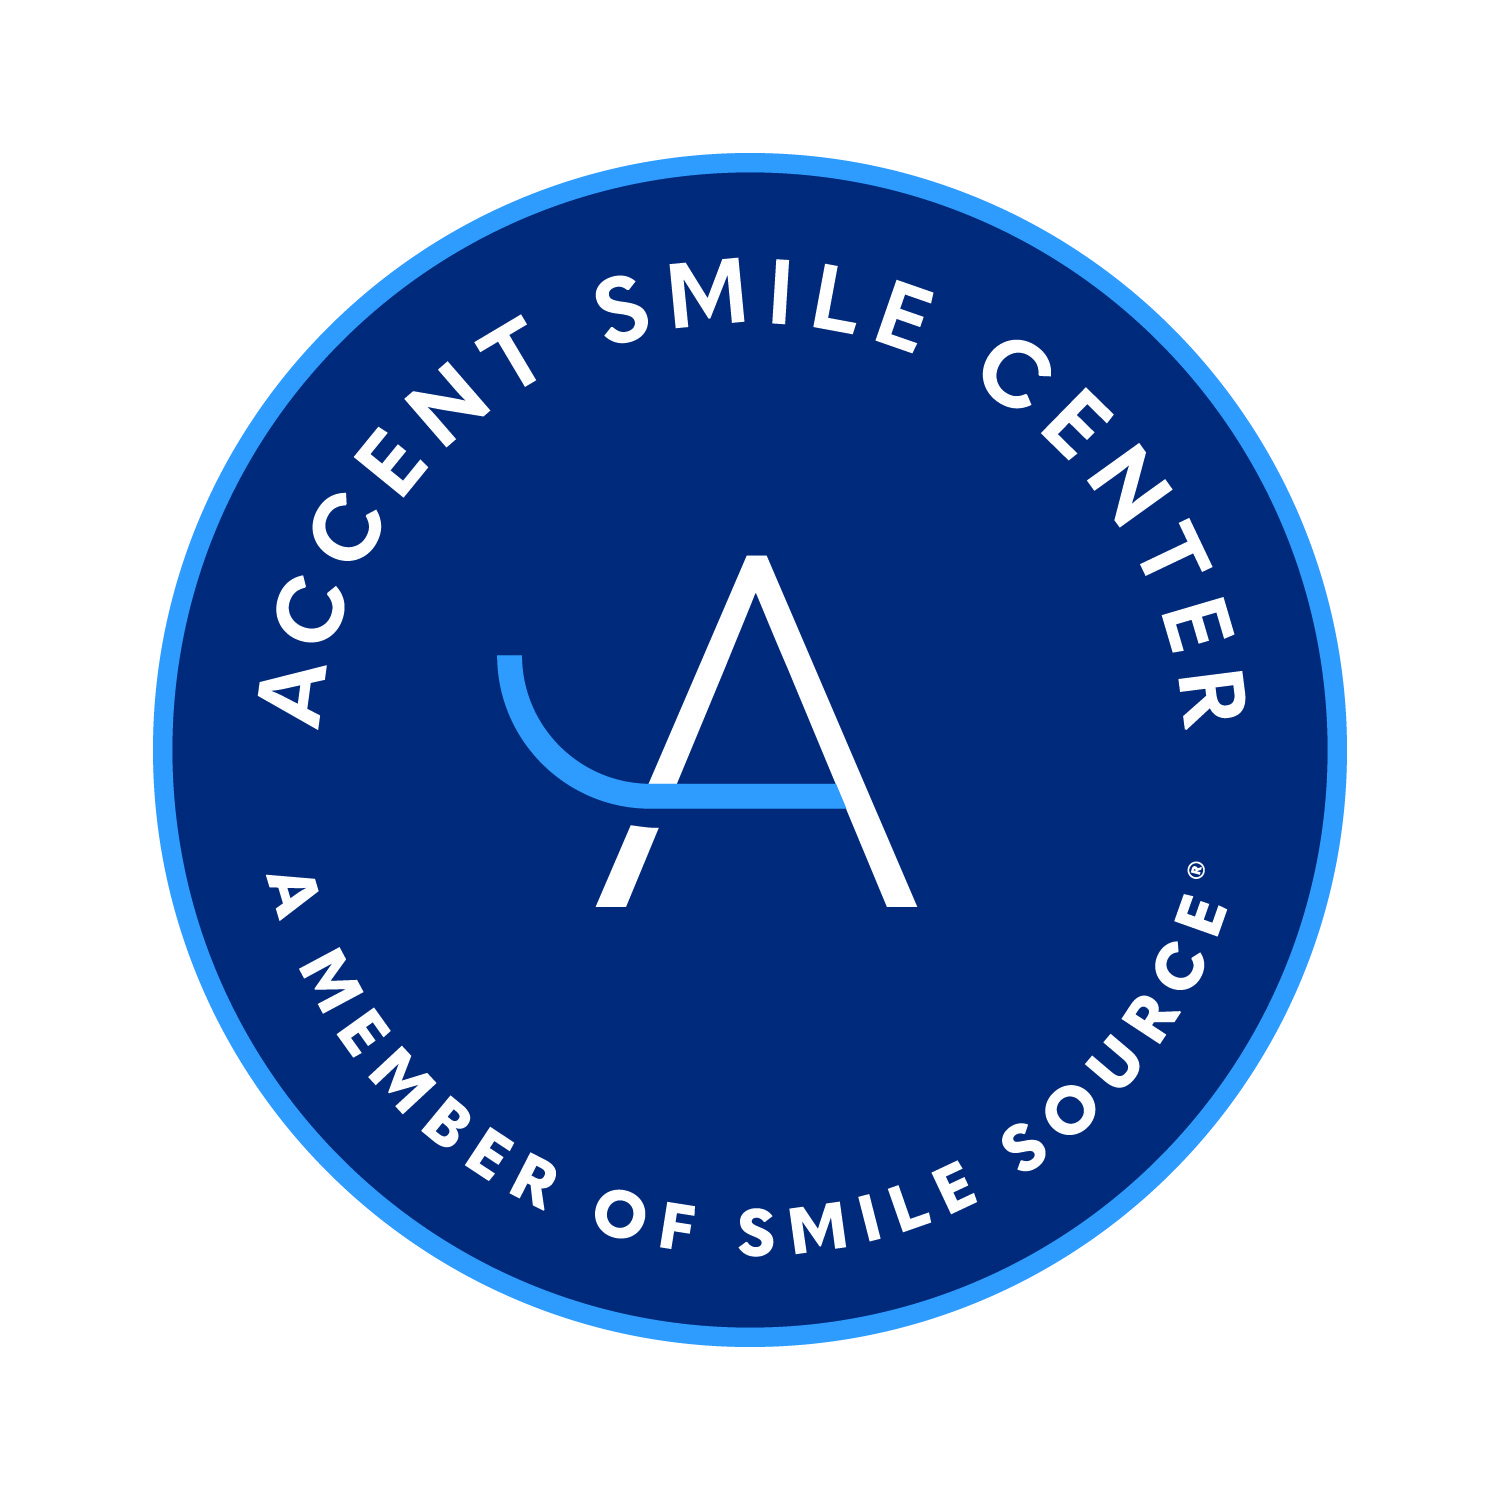 Accent Smile Center_circle reversed logo